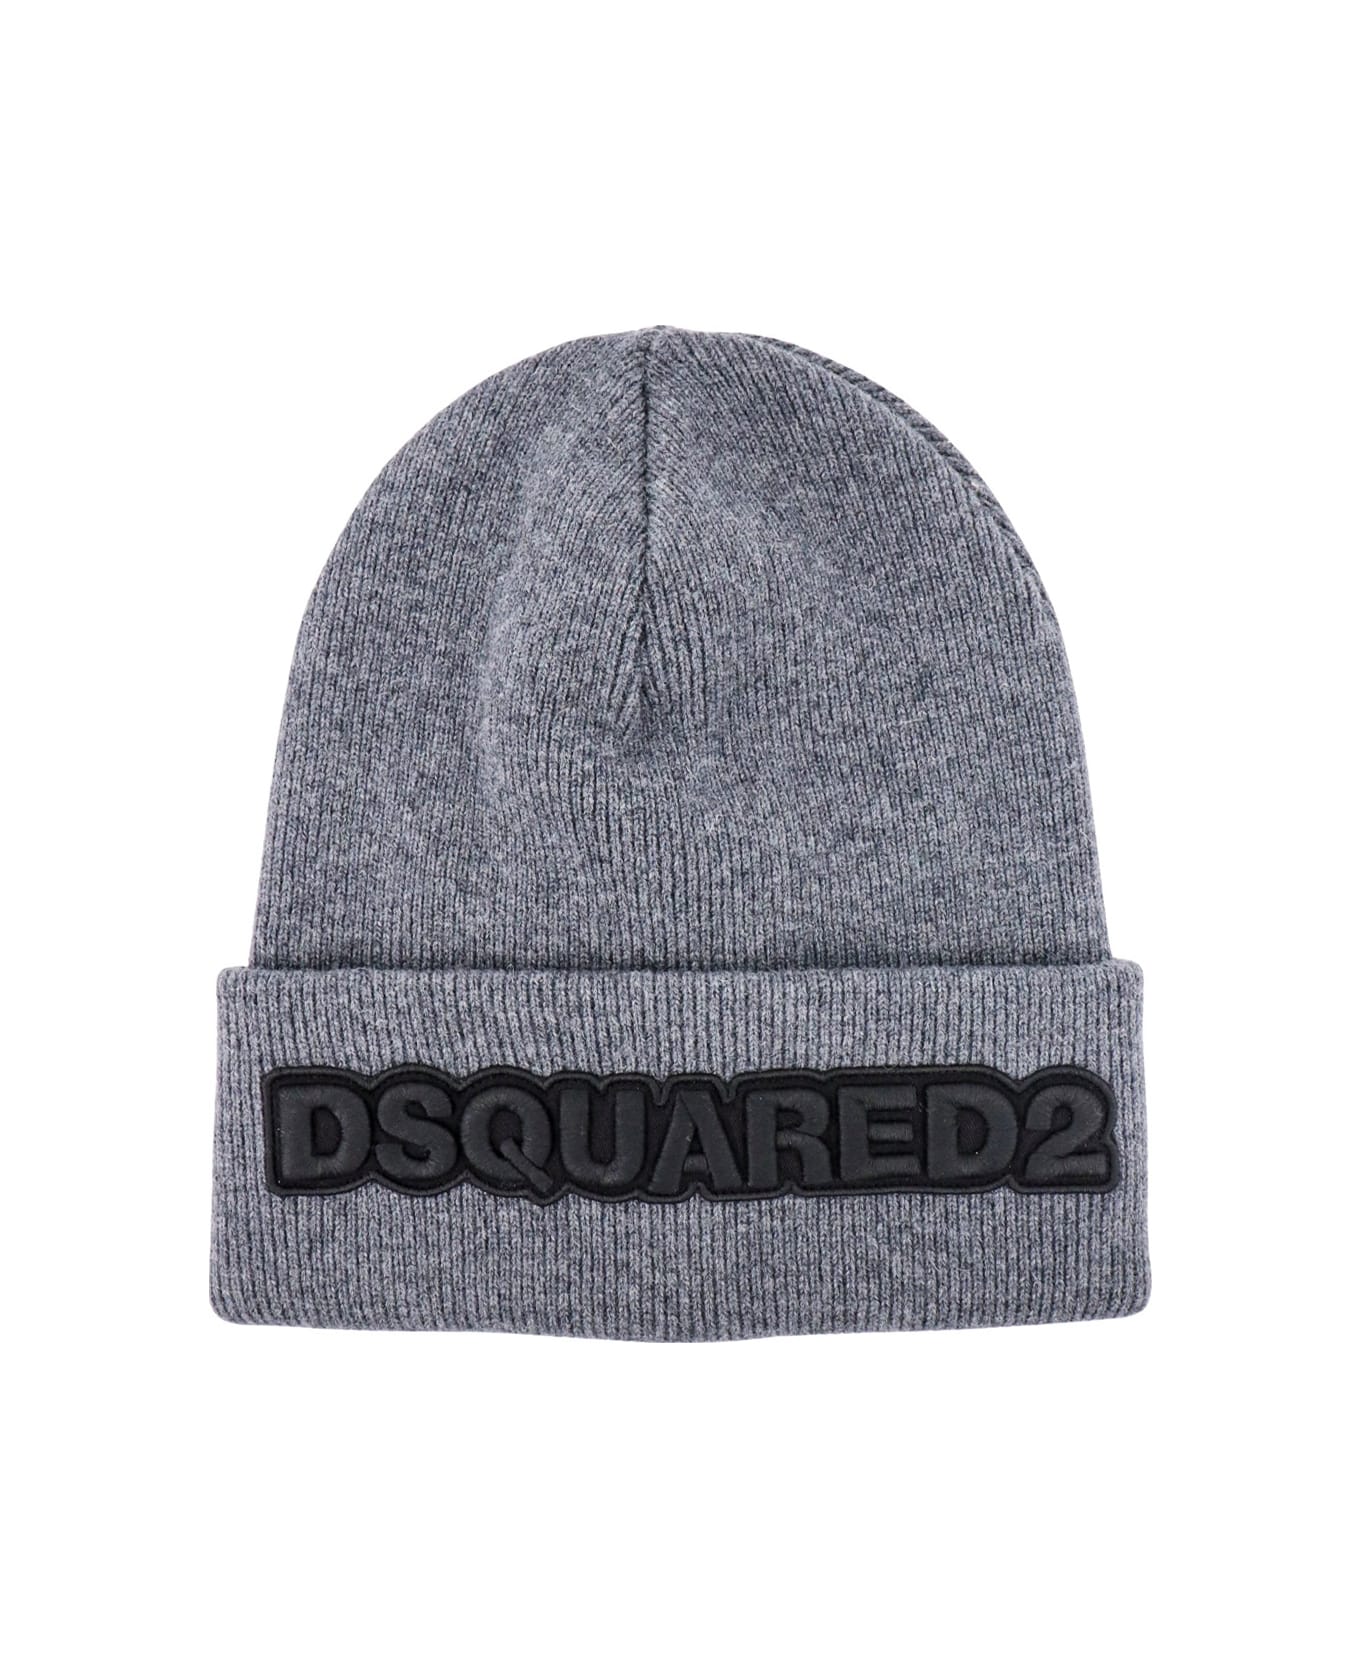 Dsquared2 crian Hat - Grey